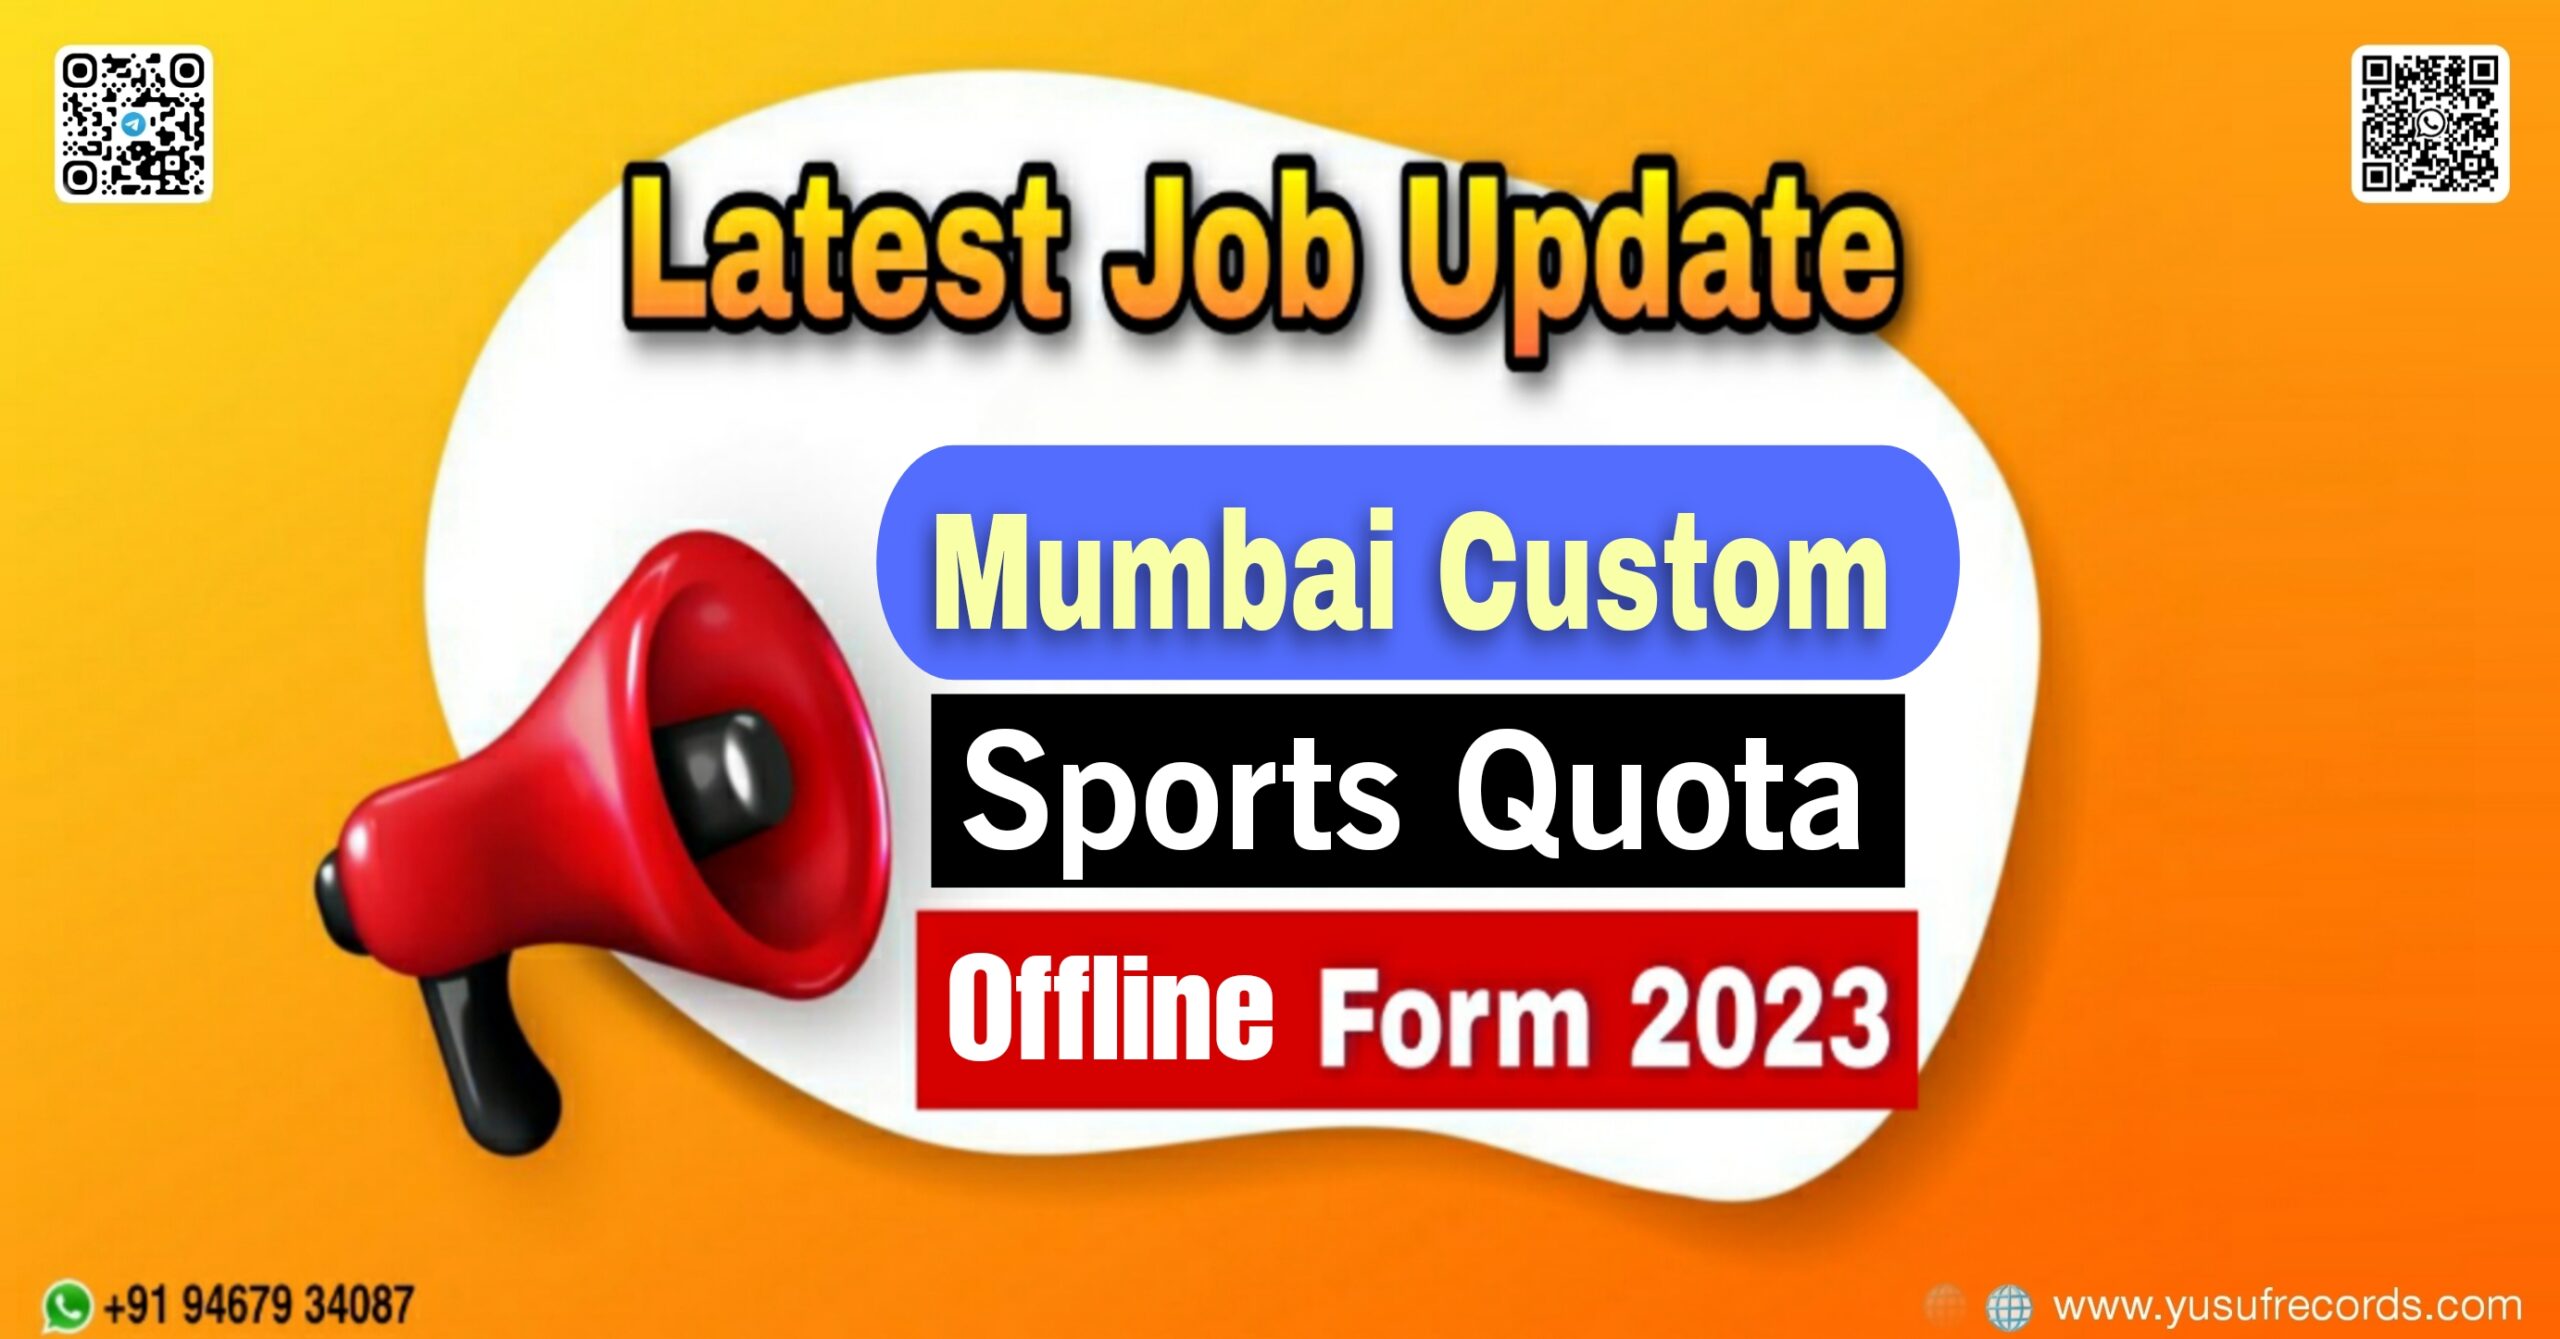 Mumbai Customs Sports Quota Offline Form